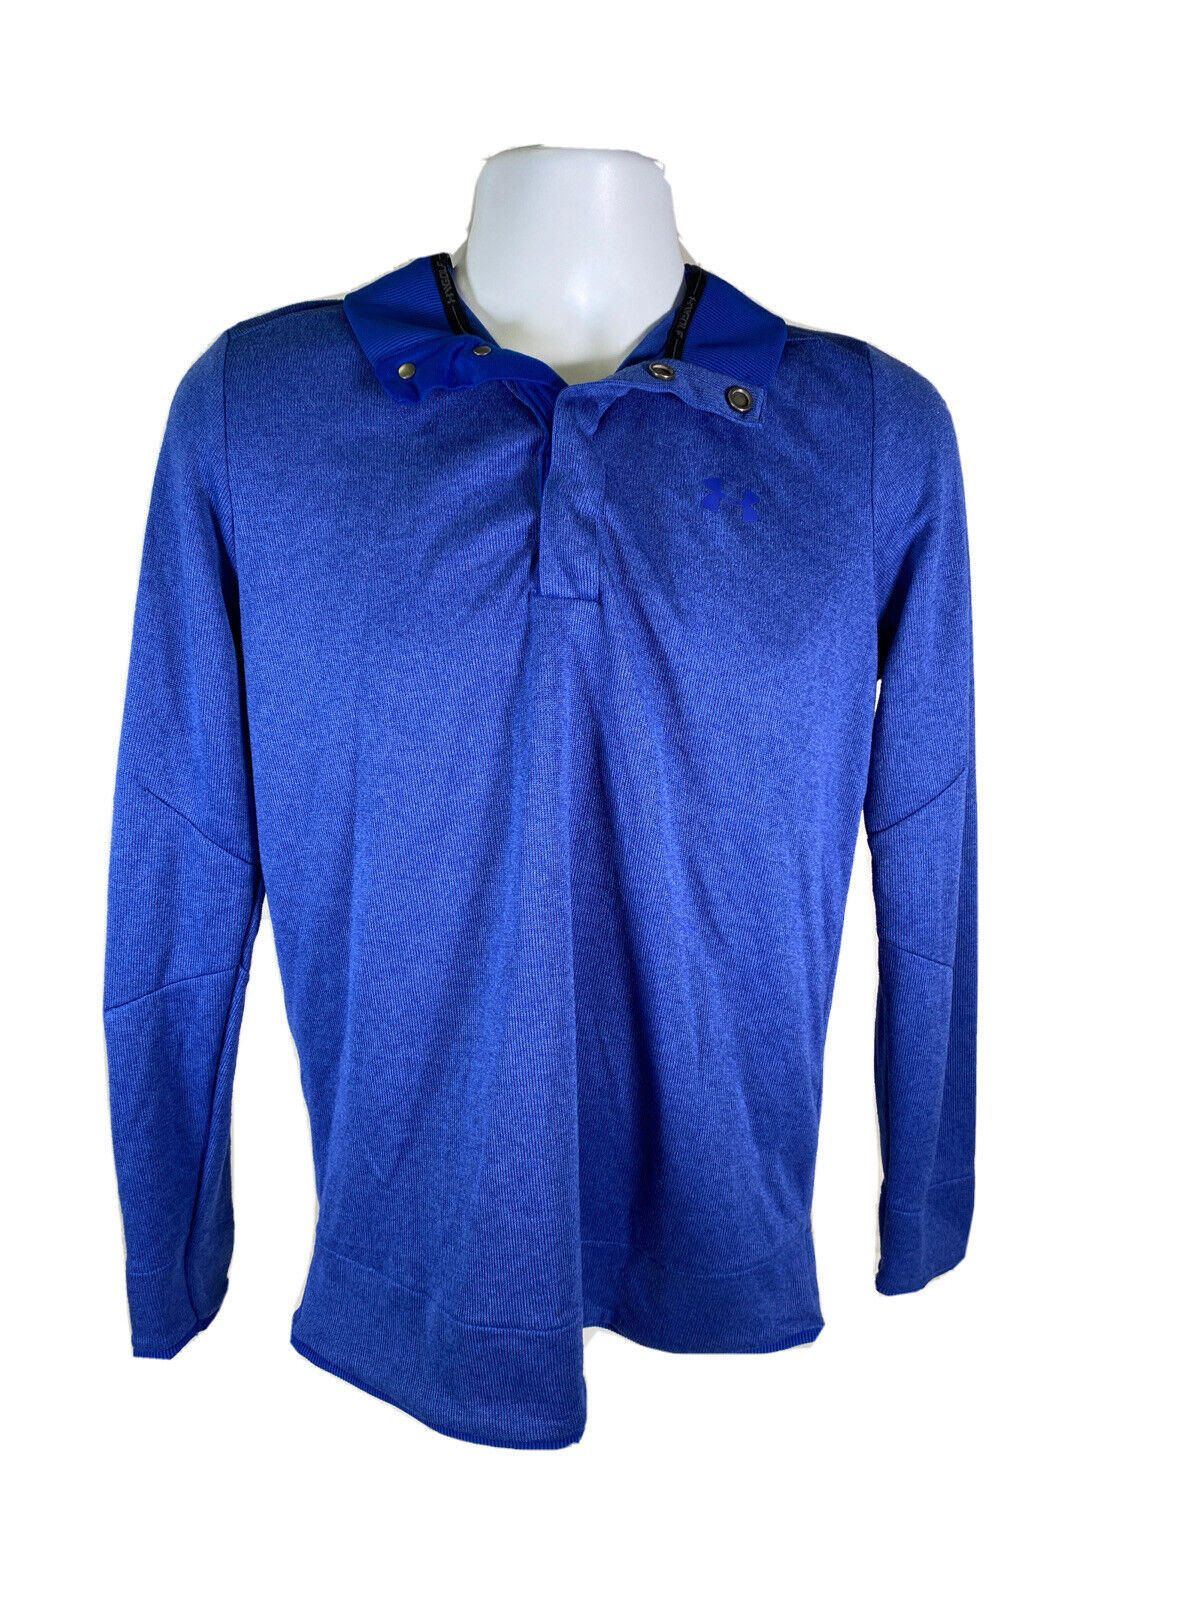 Under Armour Men's Blue Long Sleeve Knit Golf Sweatshirt Sz M